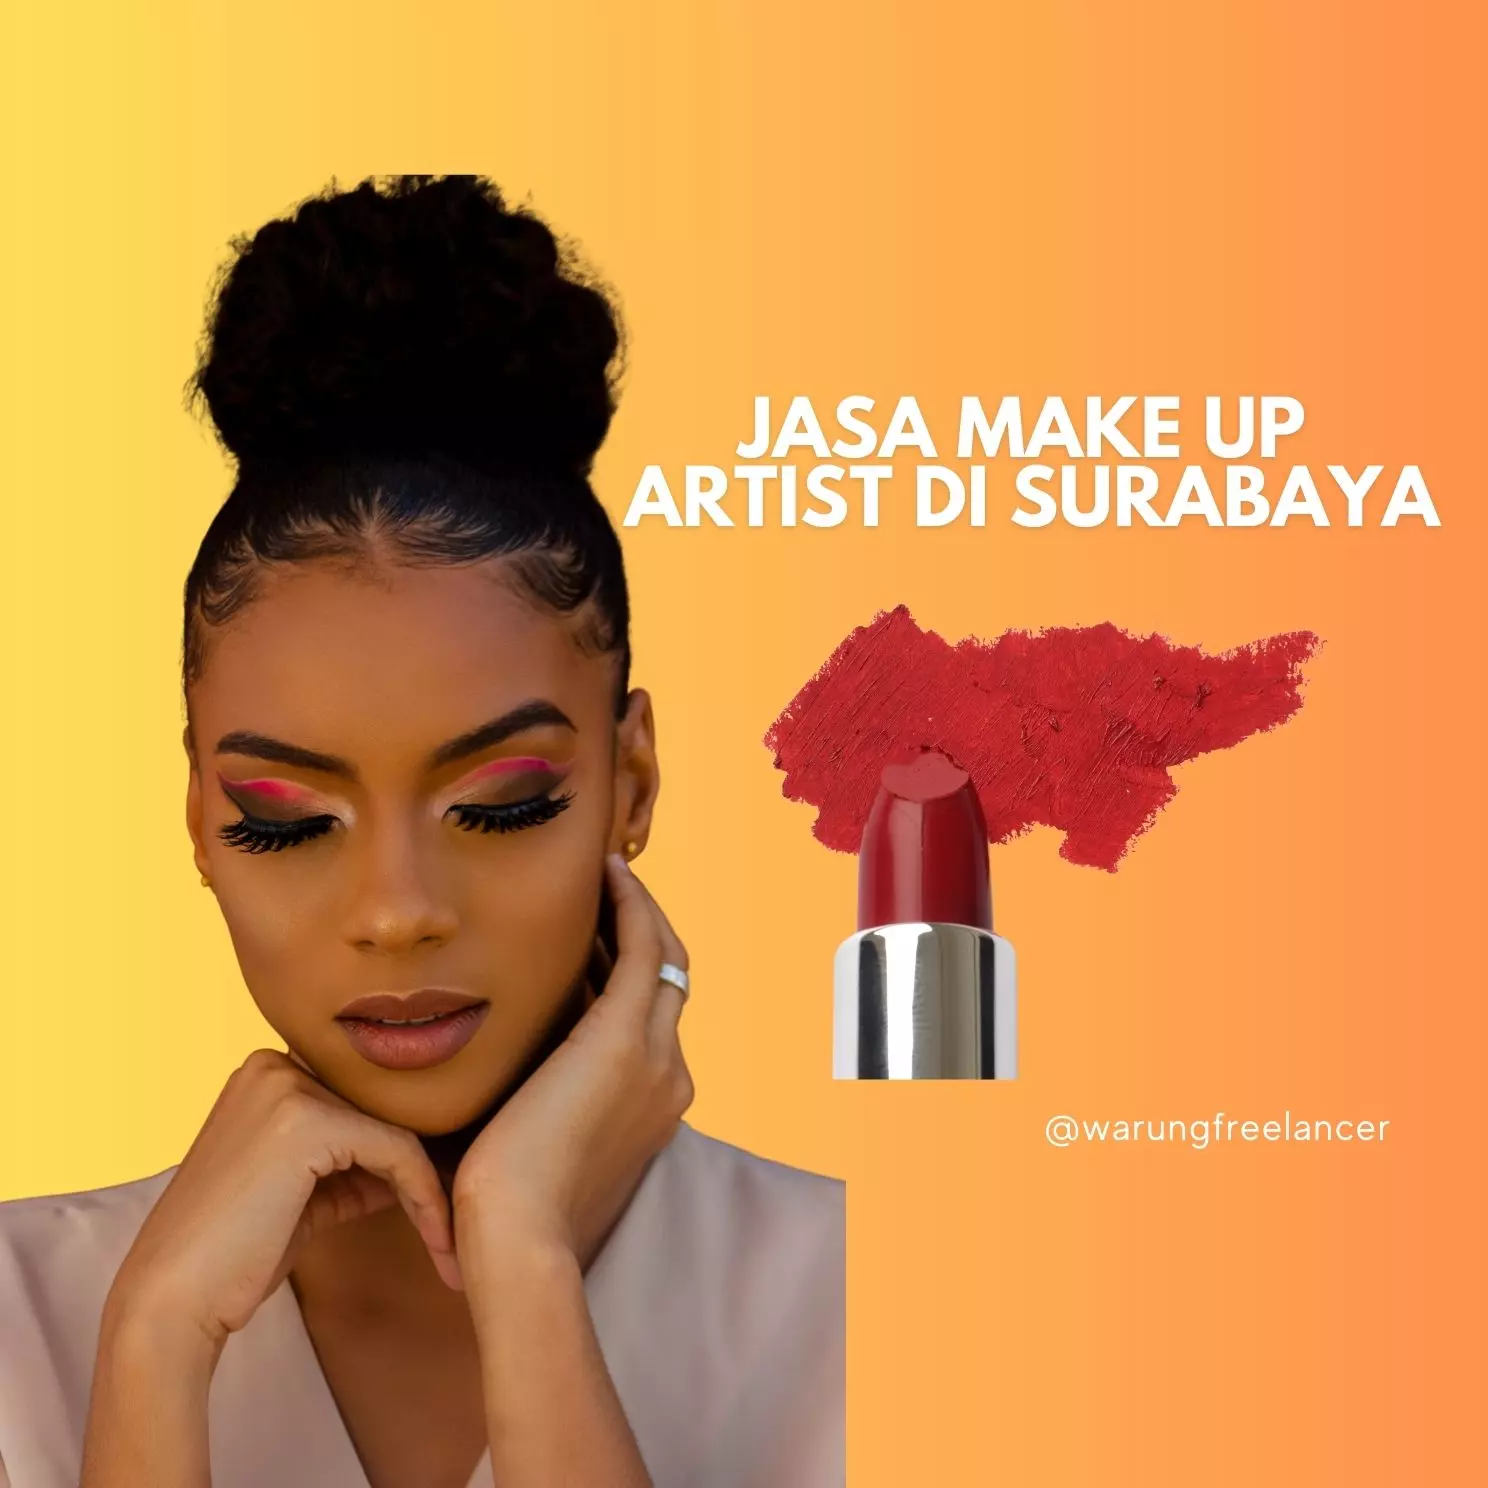 Pengertian Jasa Make Up Artist di Surabaya